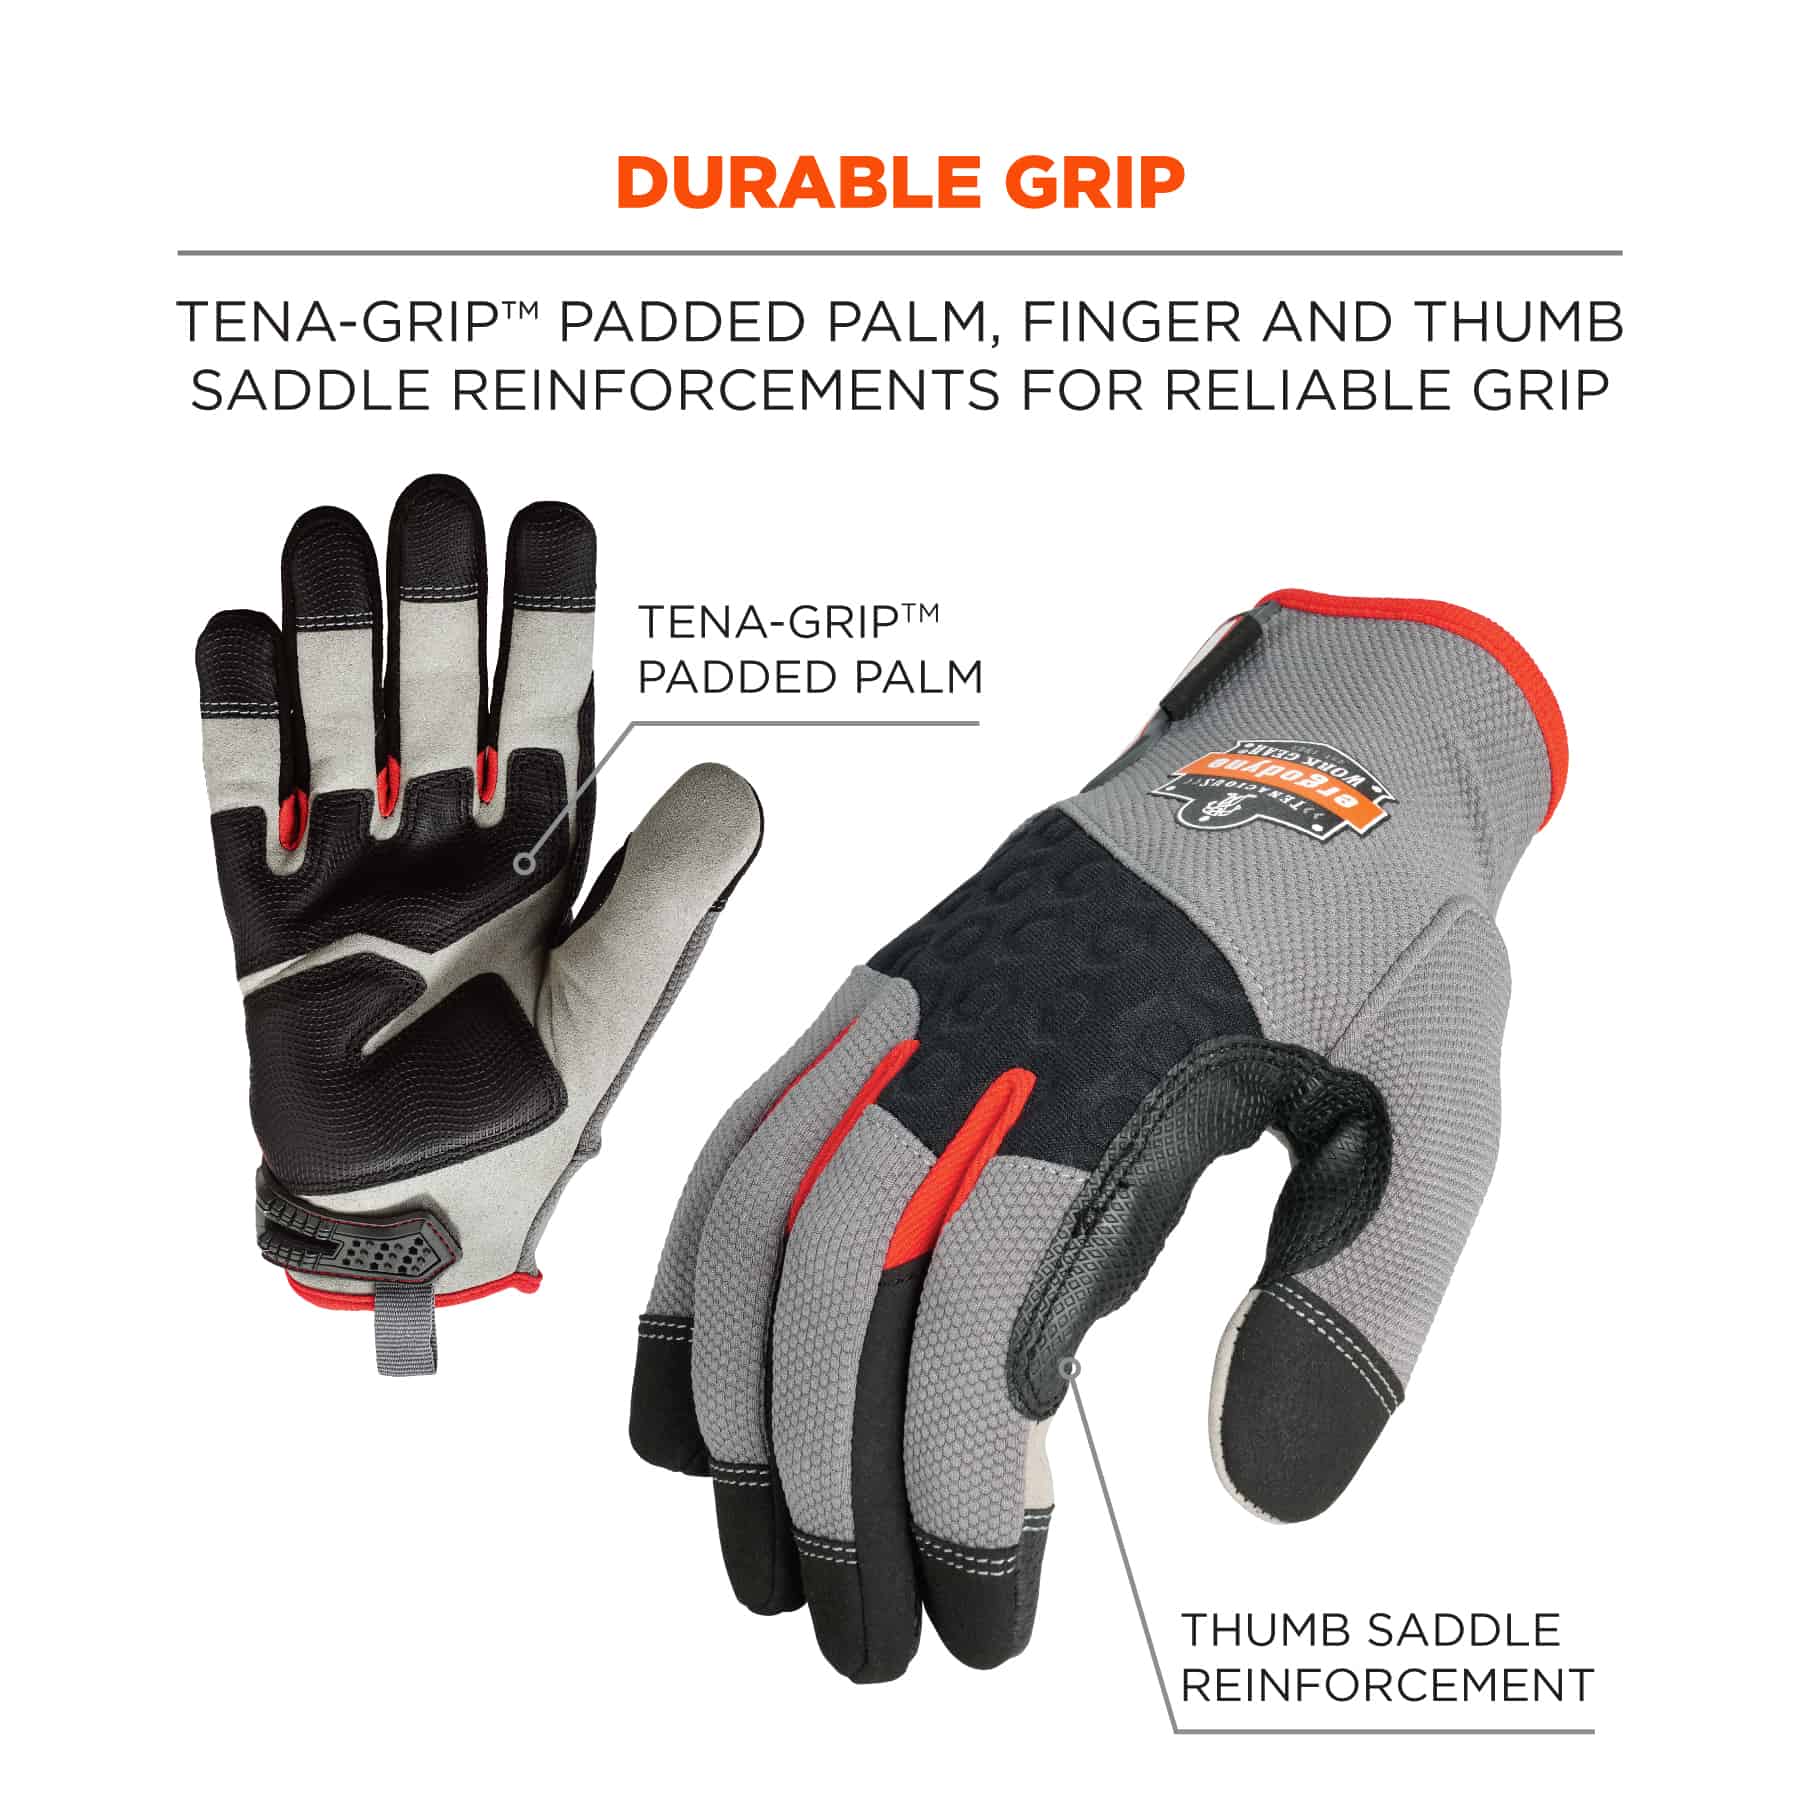 https://www.ergodyne.com/sites/default/files/product-images/17122-710cr-heavy-duty-cut-resistance-gloves-durable-grip.jpg